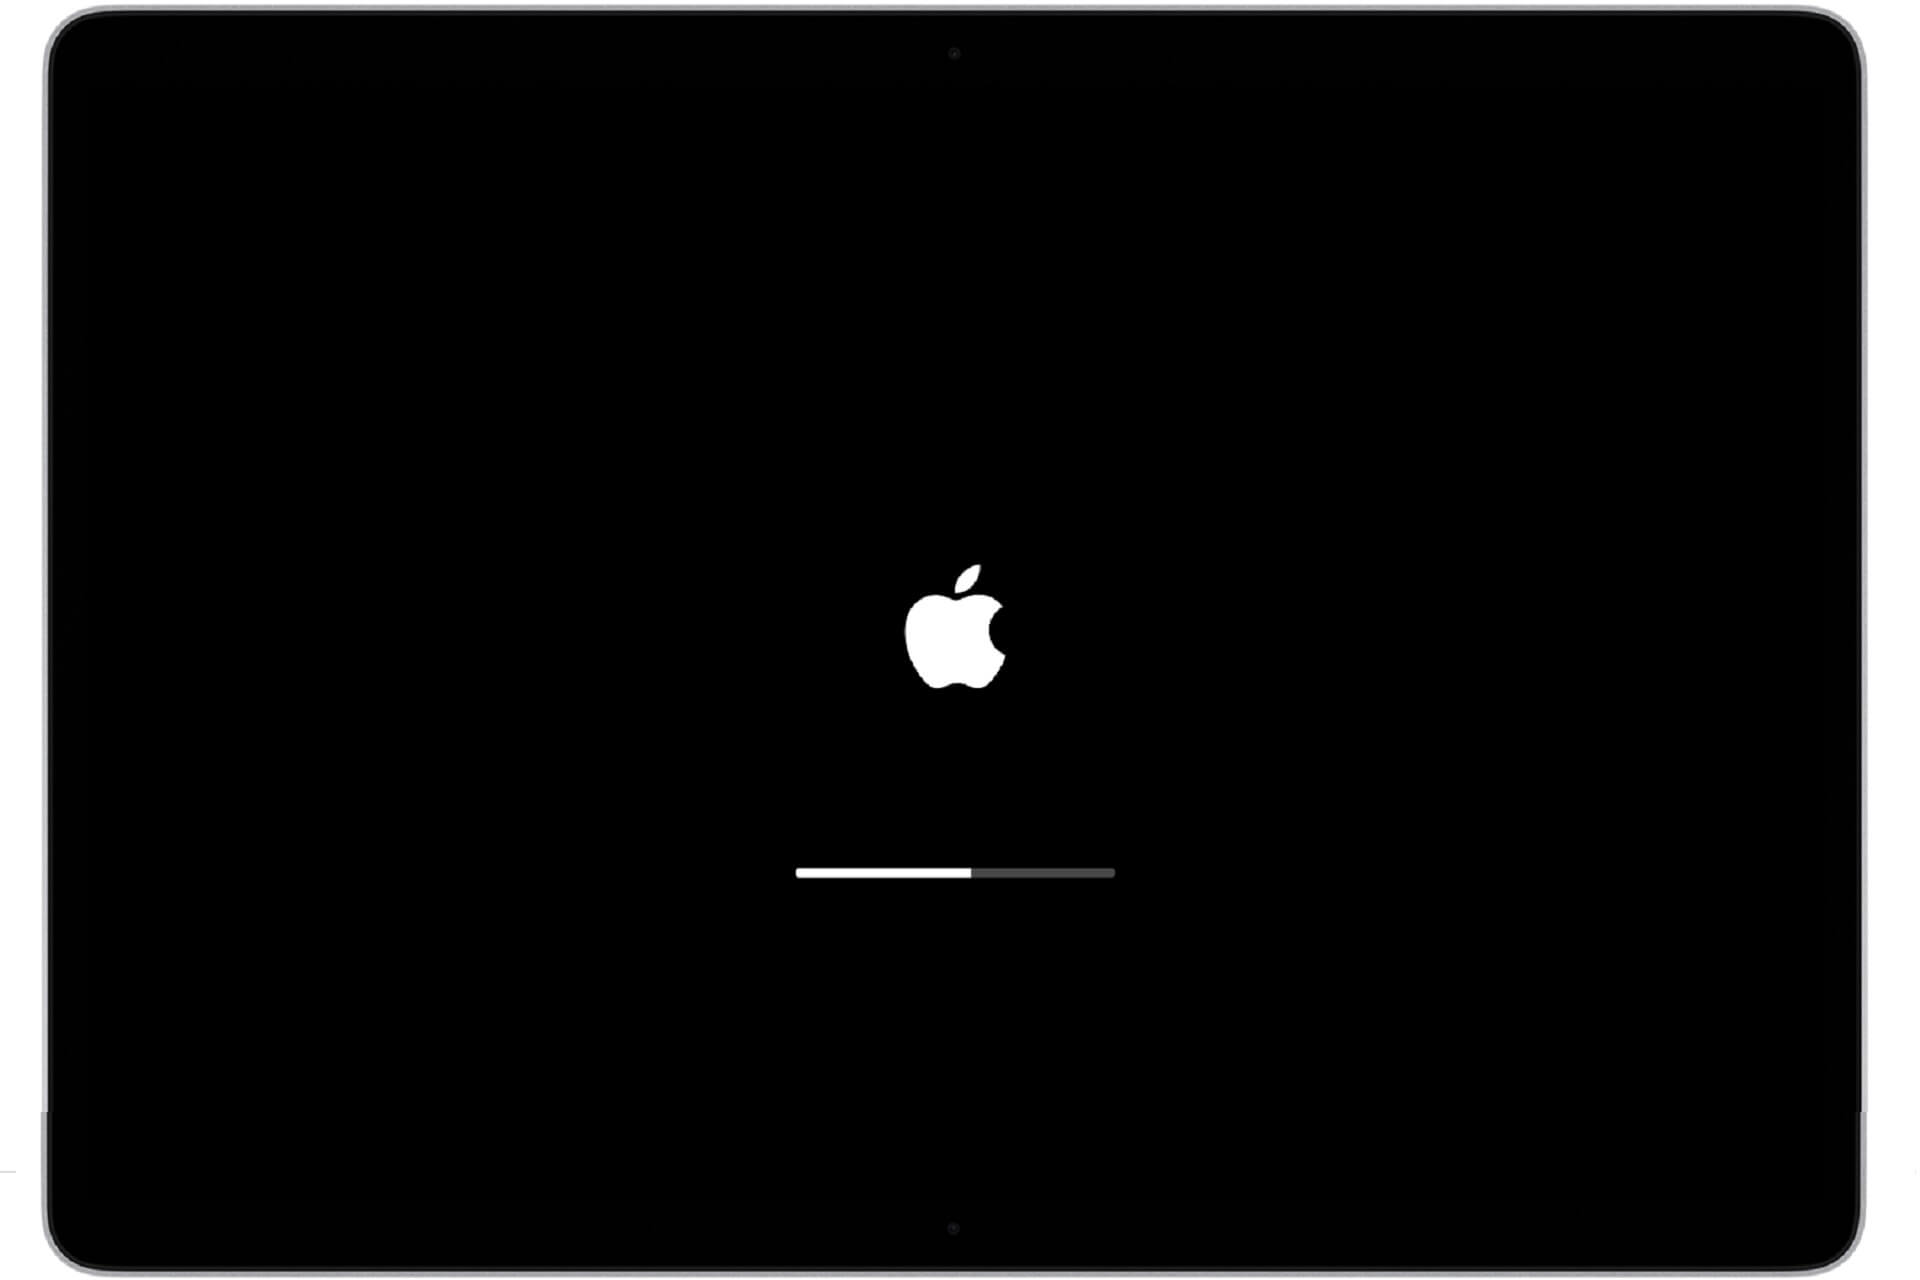 macbook gets stuck on login screen